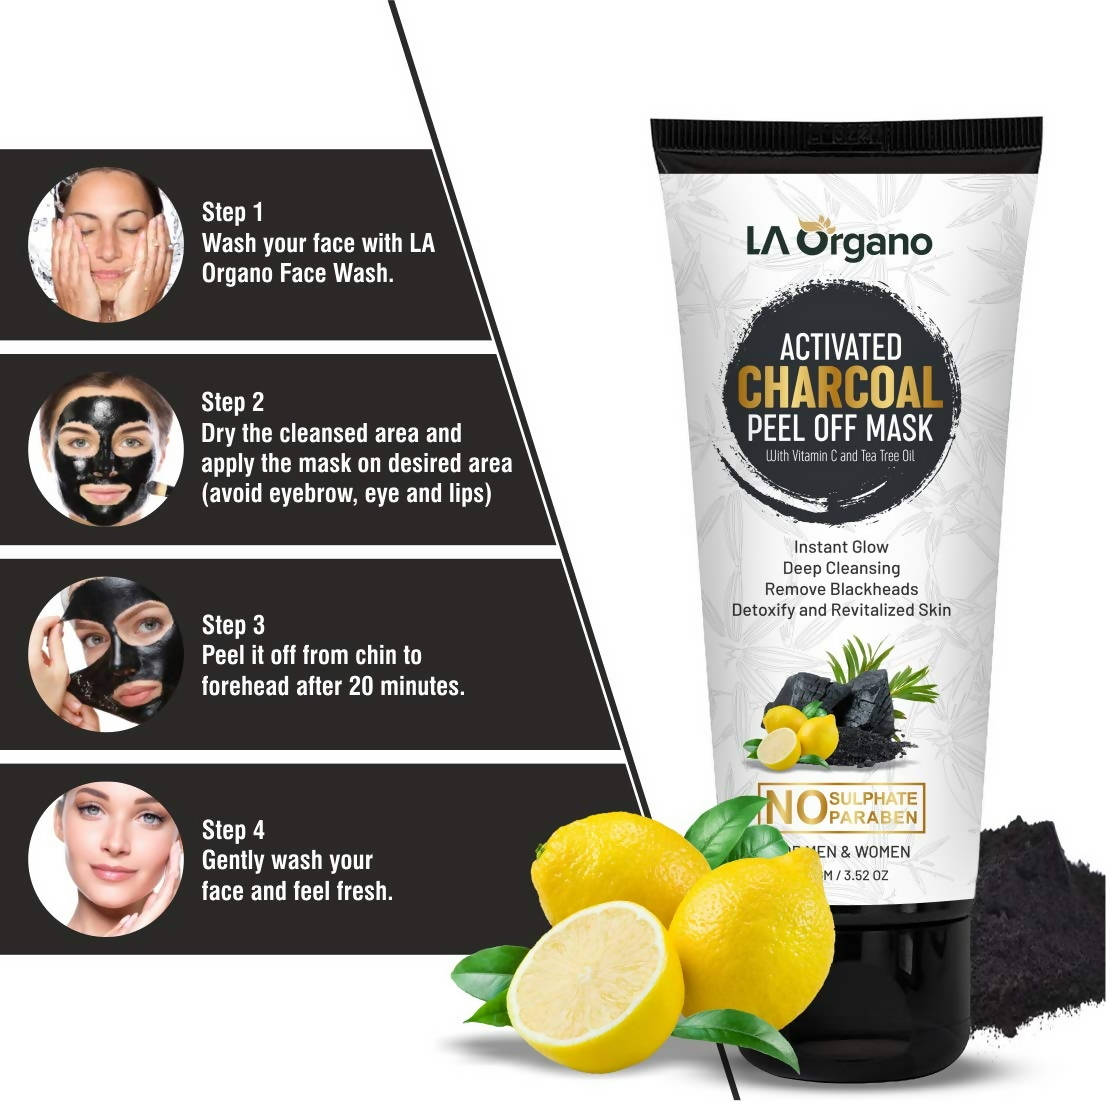 LA Organo Blackhead Remover Activated Charcoal Peel Off Mask